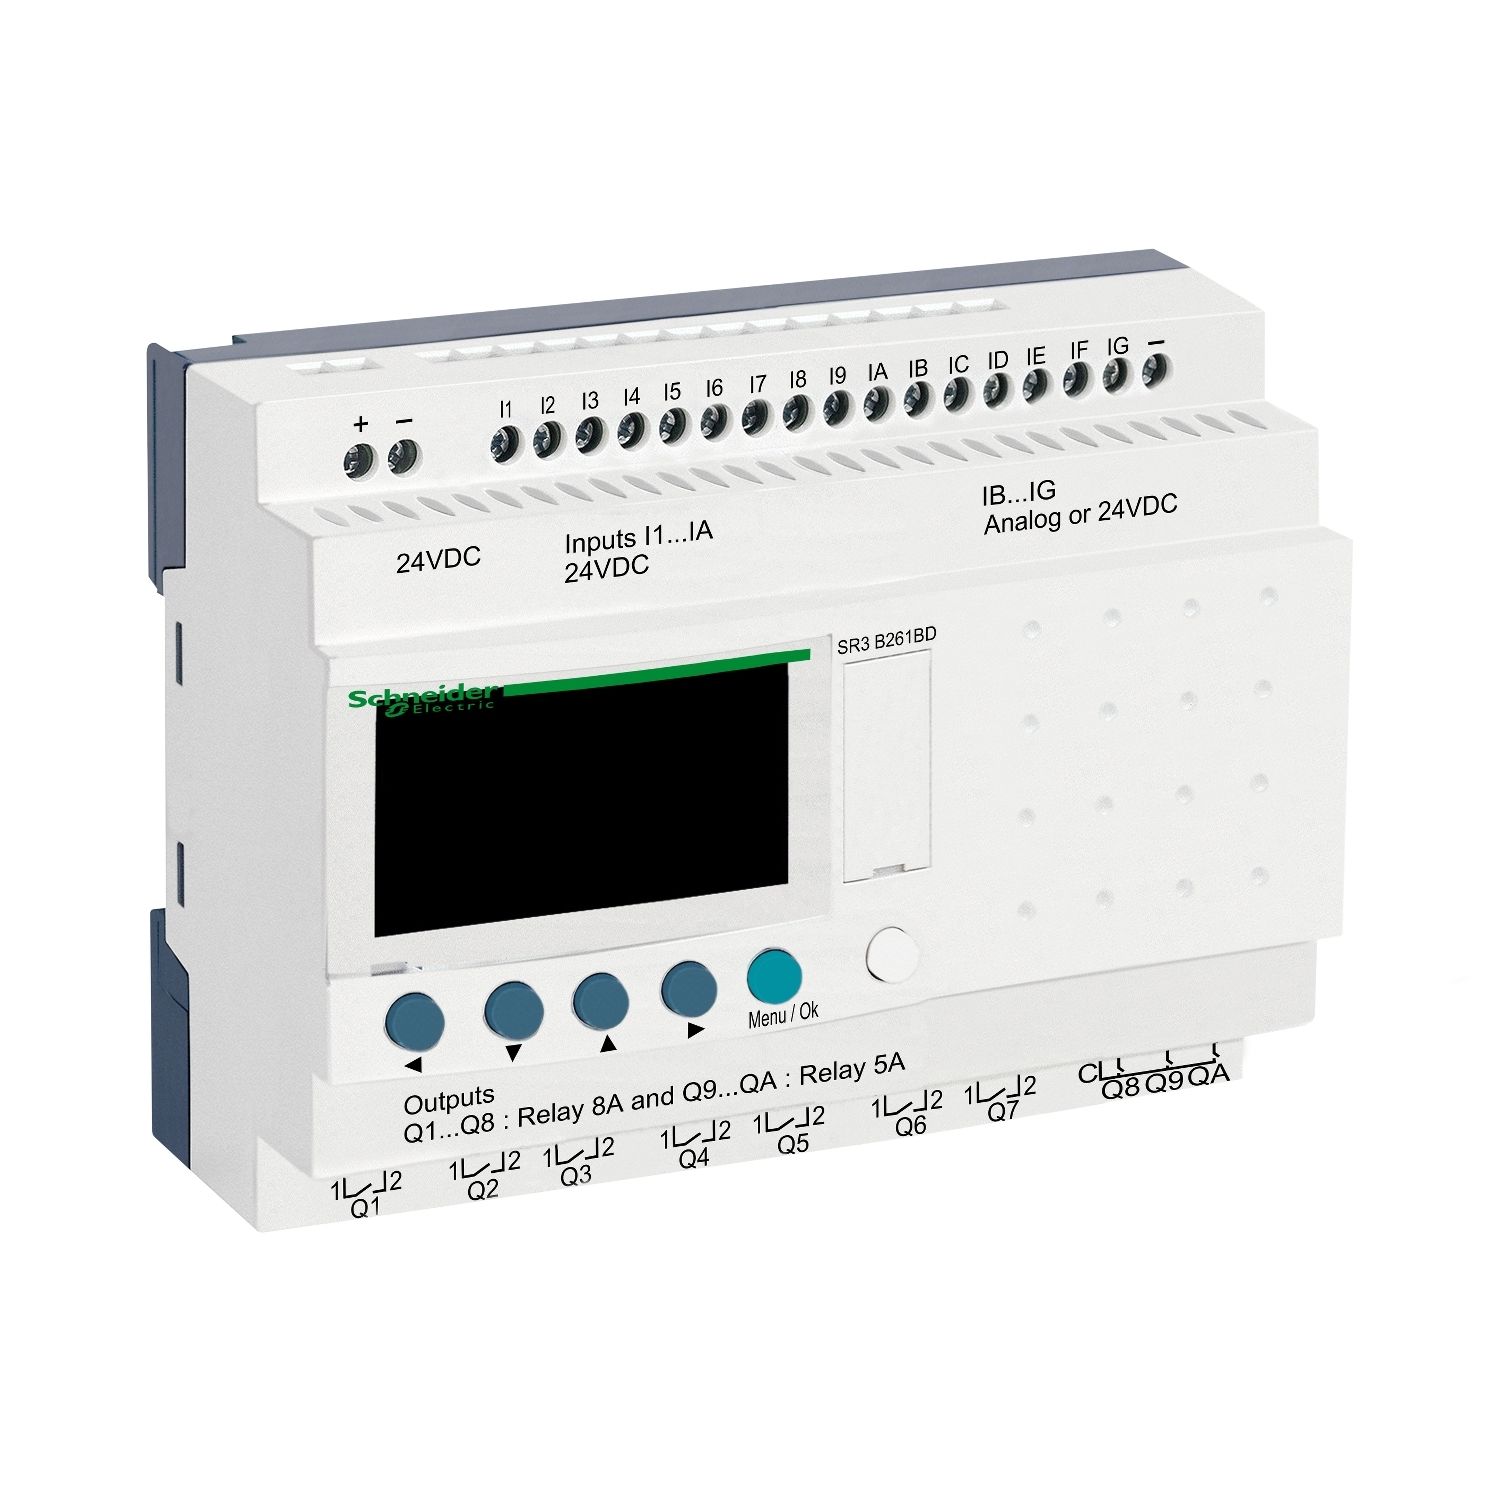 SR3B261BD modular smart relay, Zelio Logic SR2 SR3, 26 IO, 24V DC, clock, display, 10 relay outputs